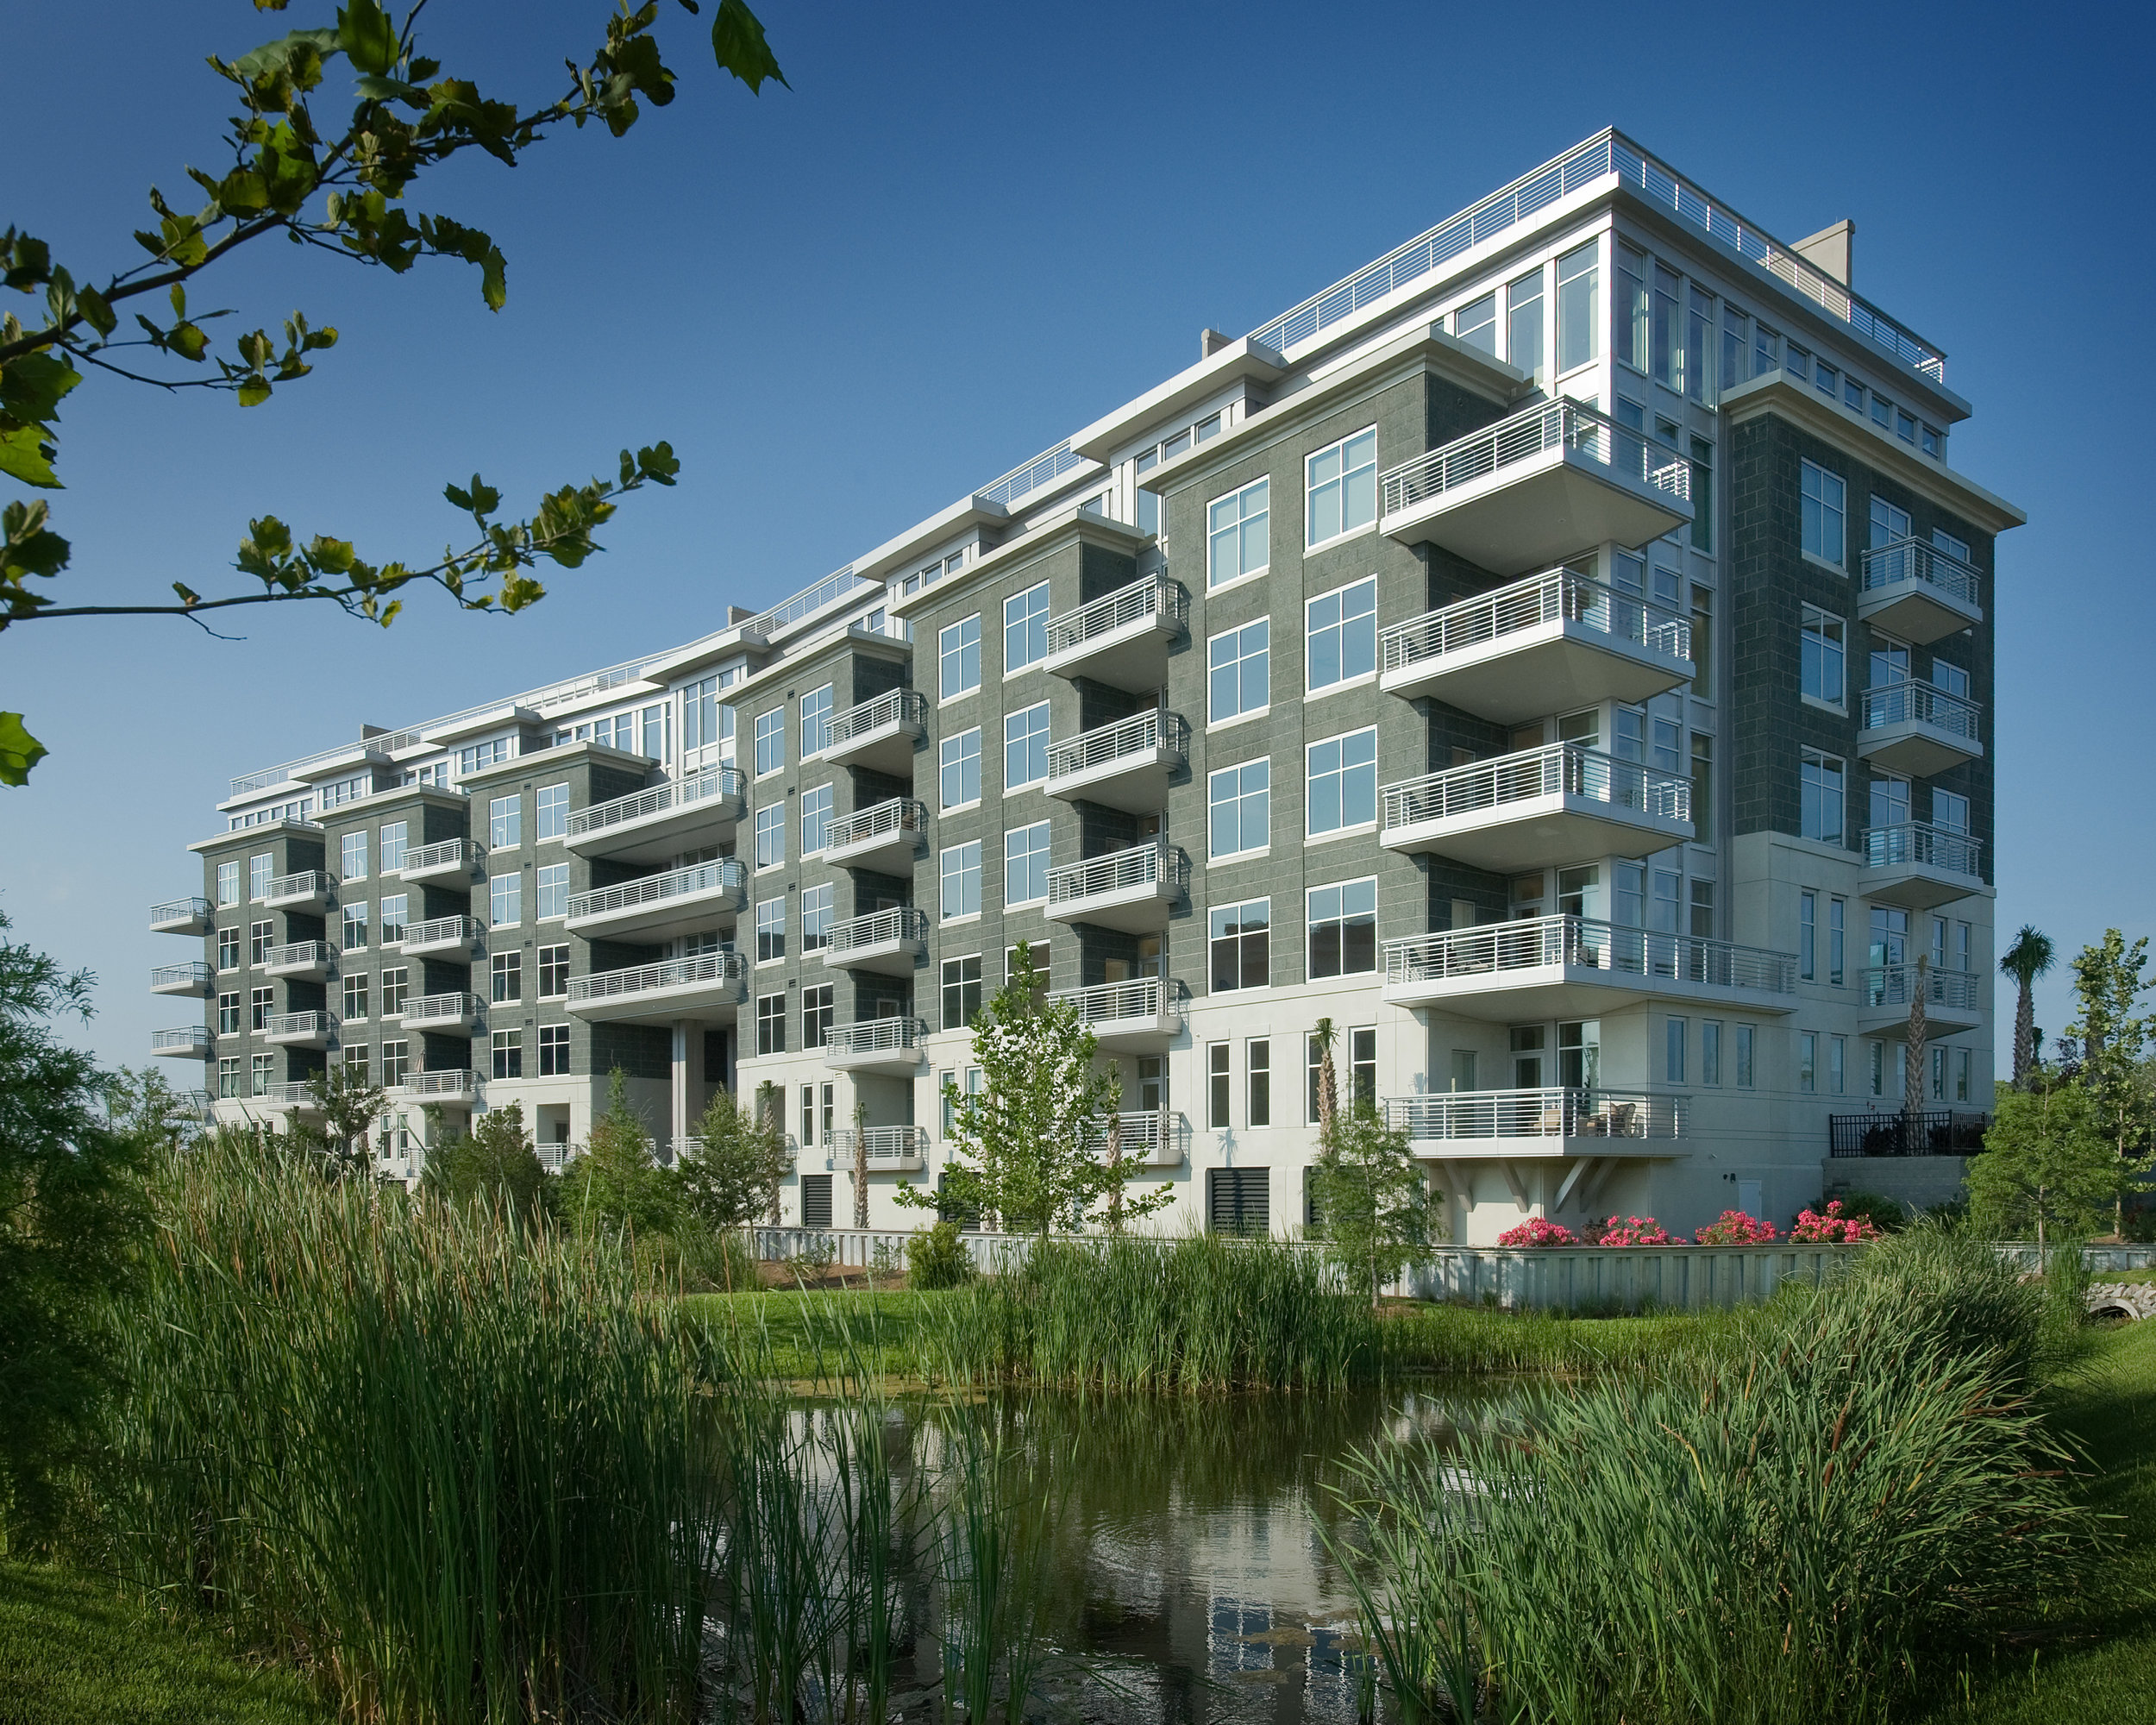 luxury-condominiums-charleston-fmk-architects